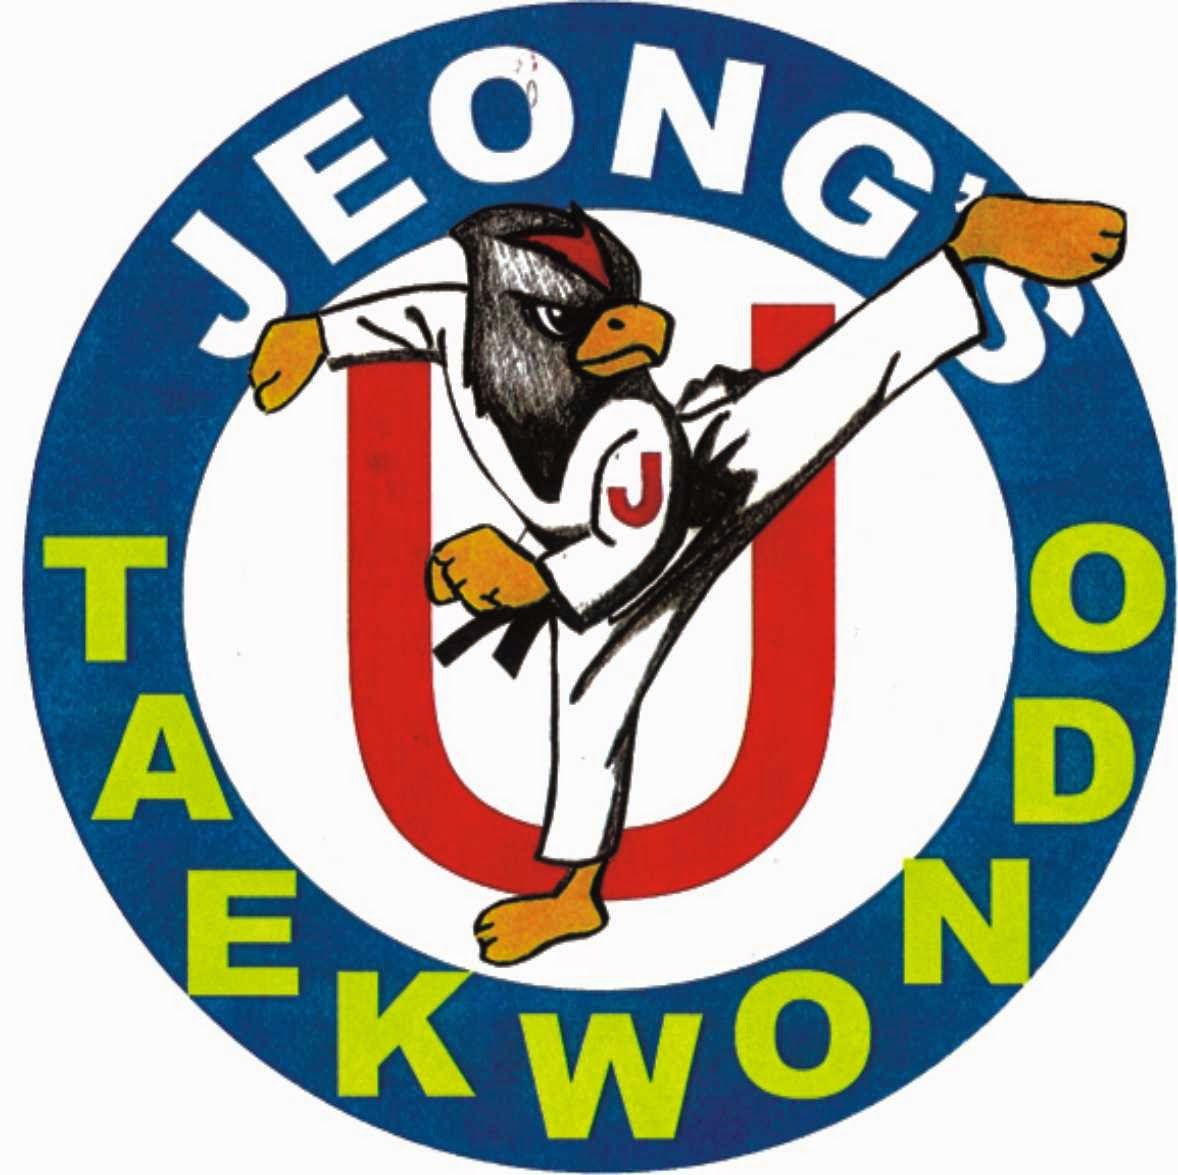 Jeong's urbana Taekwondo & Yoga 3506 Worthington Blvd Frederick, Urbana Maryland 21704